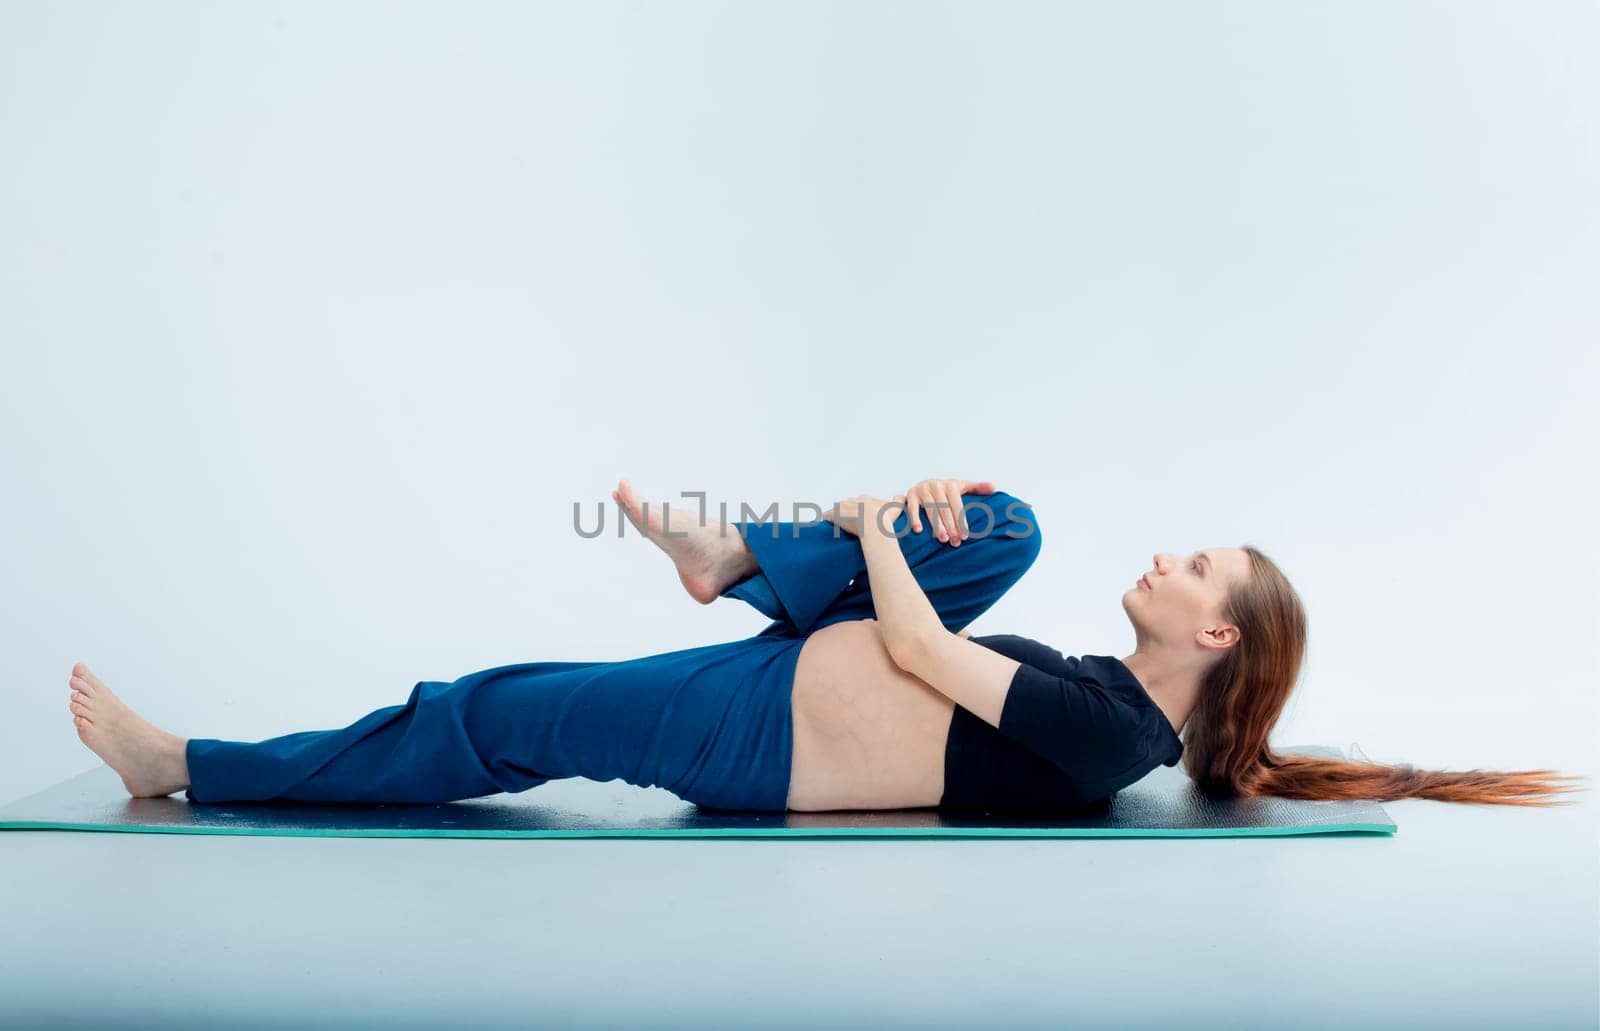 Stage of pregnancy. pregnant woman training yoga by kajasja